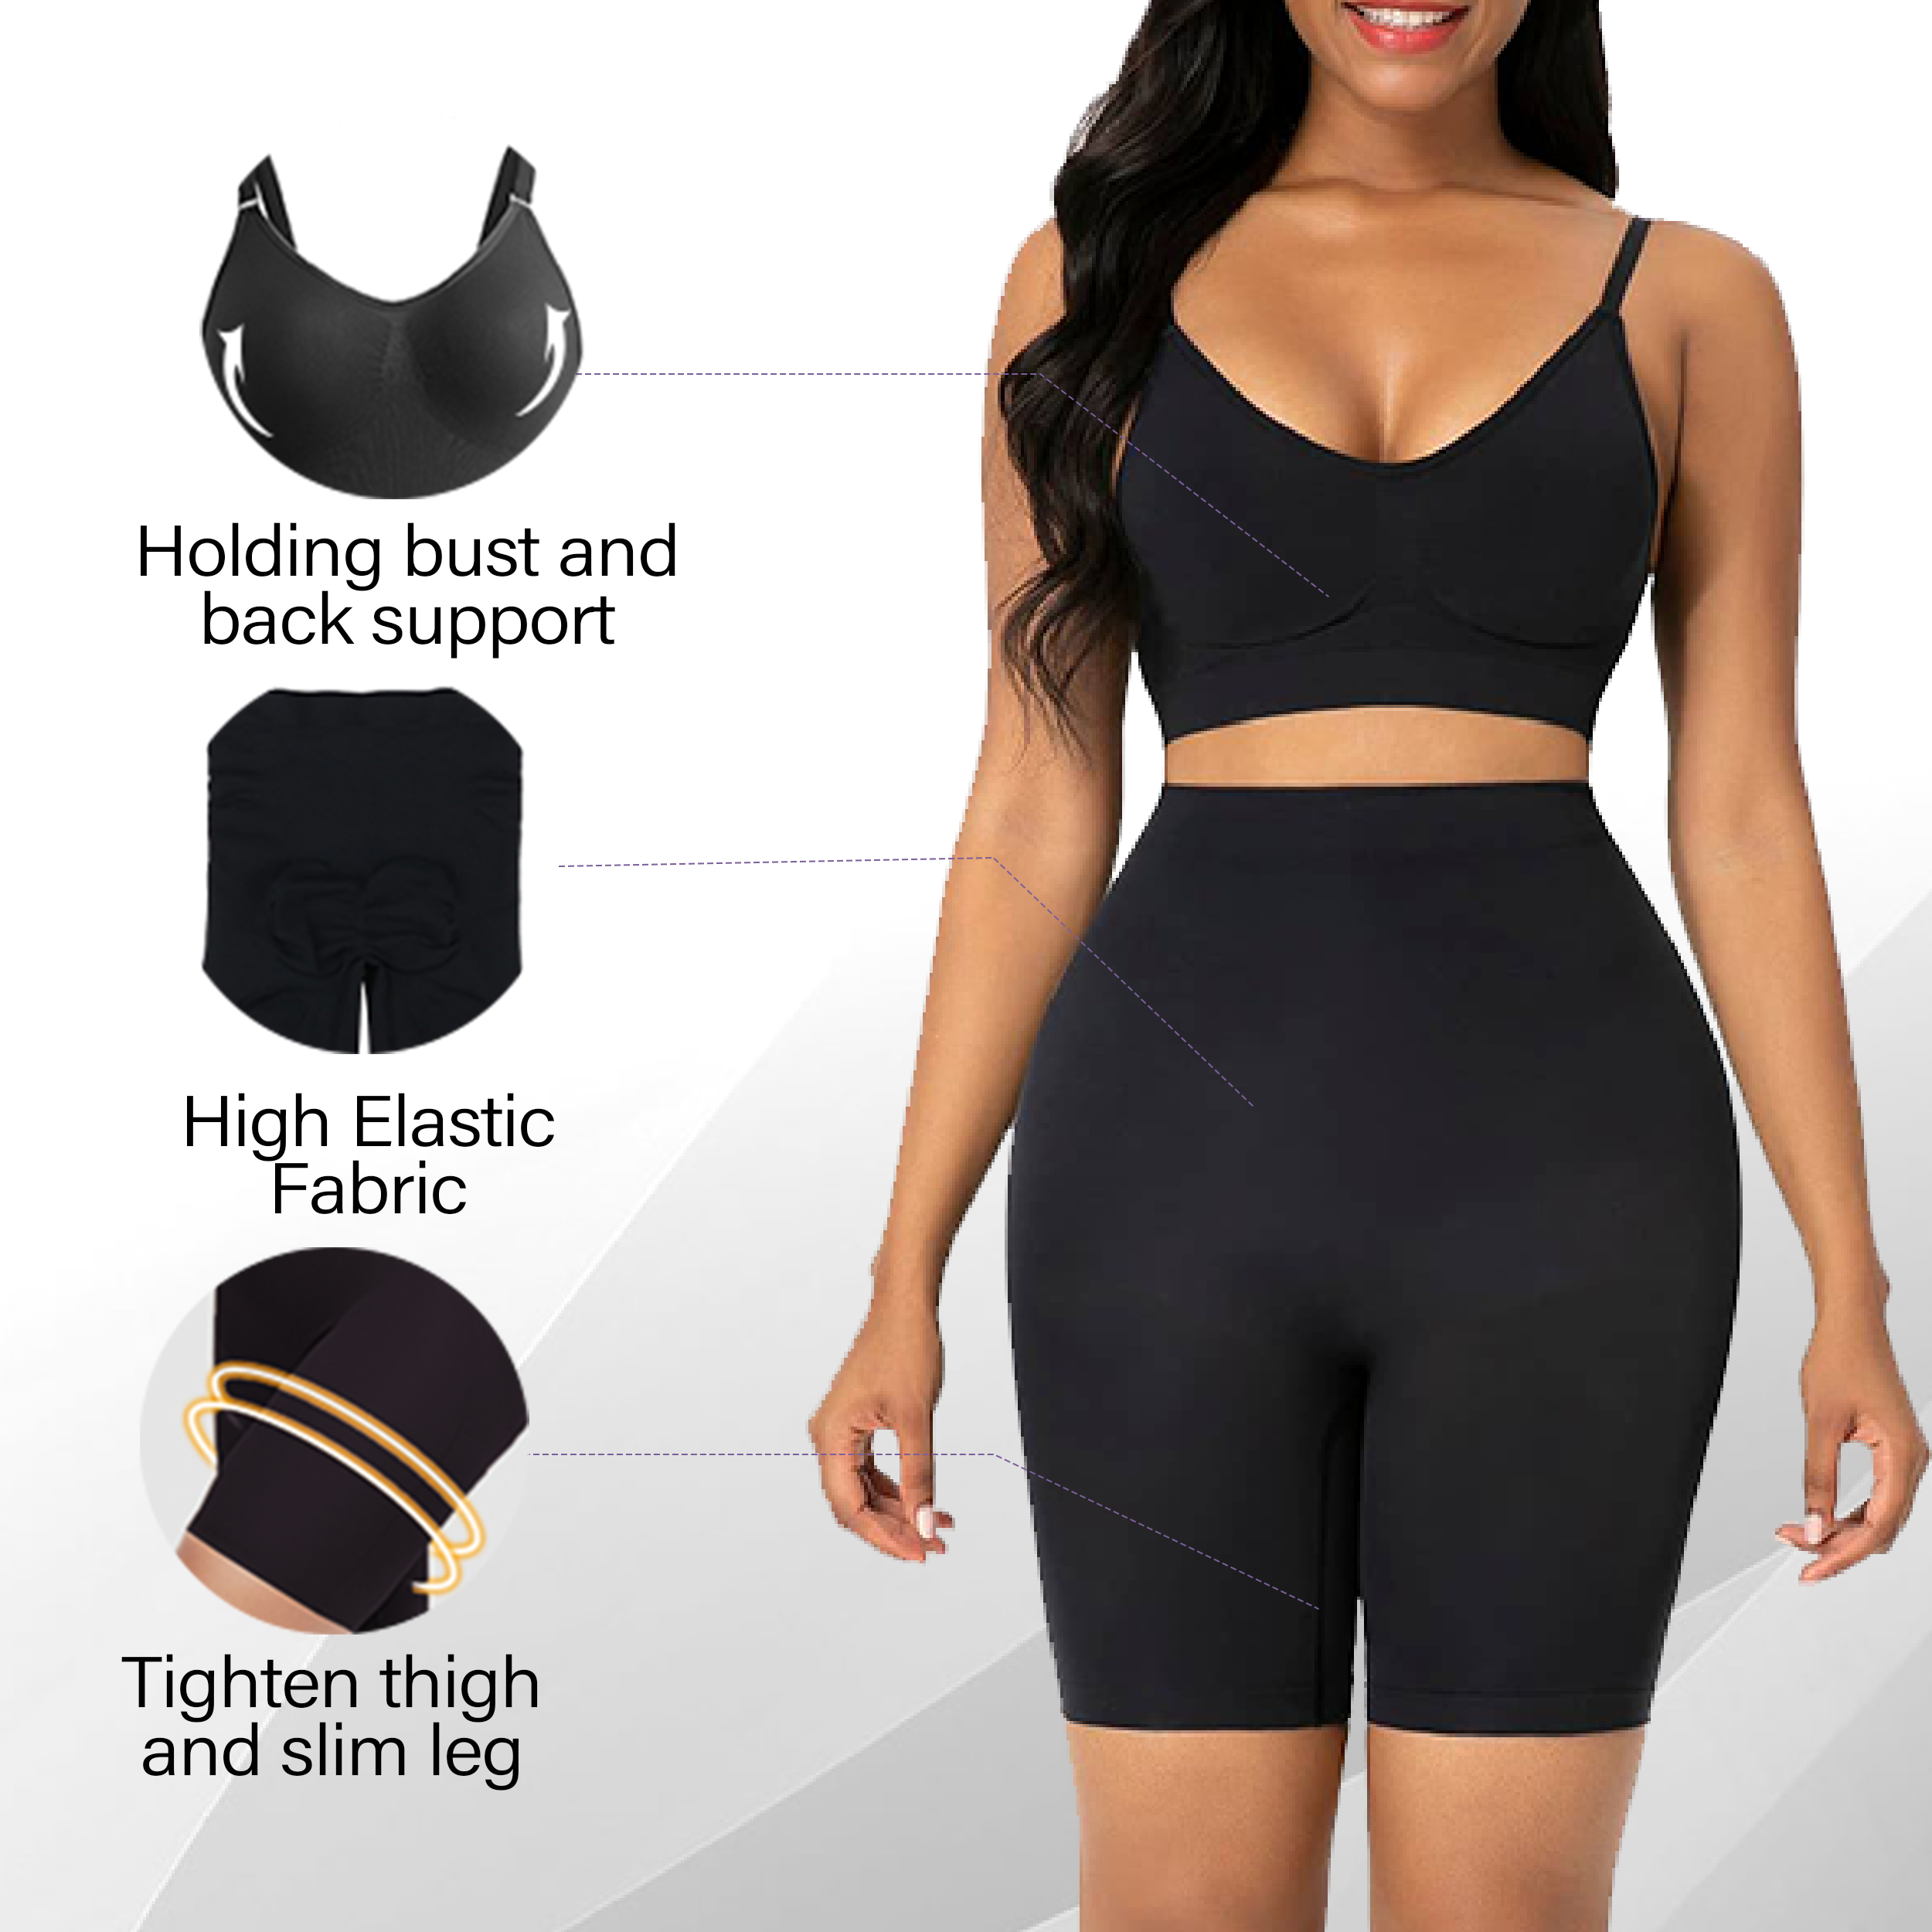 Seamless Body Shapewear for Women - 2 Piece No Wire Bra with High